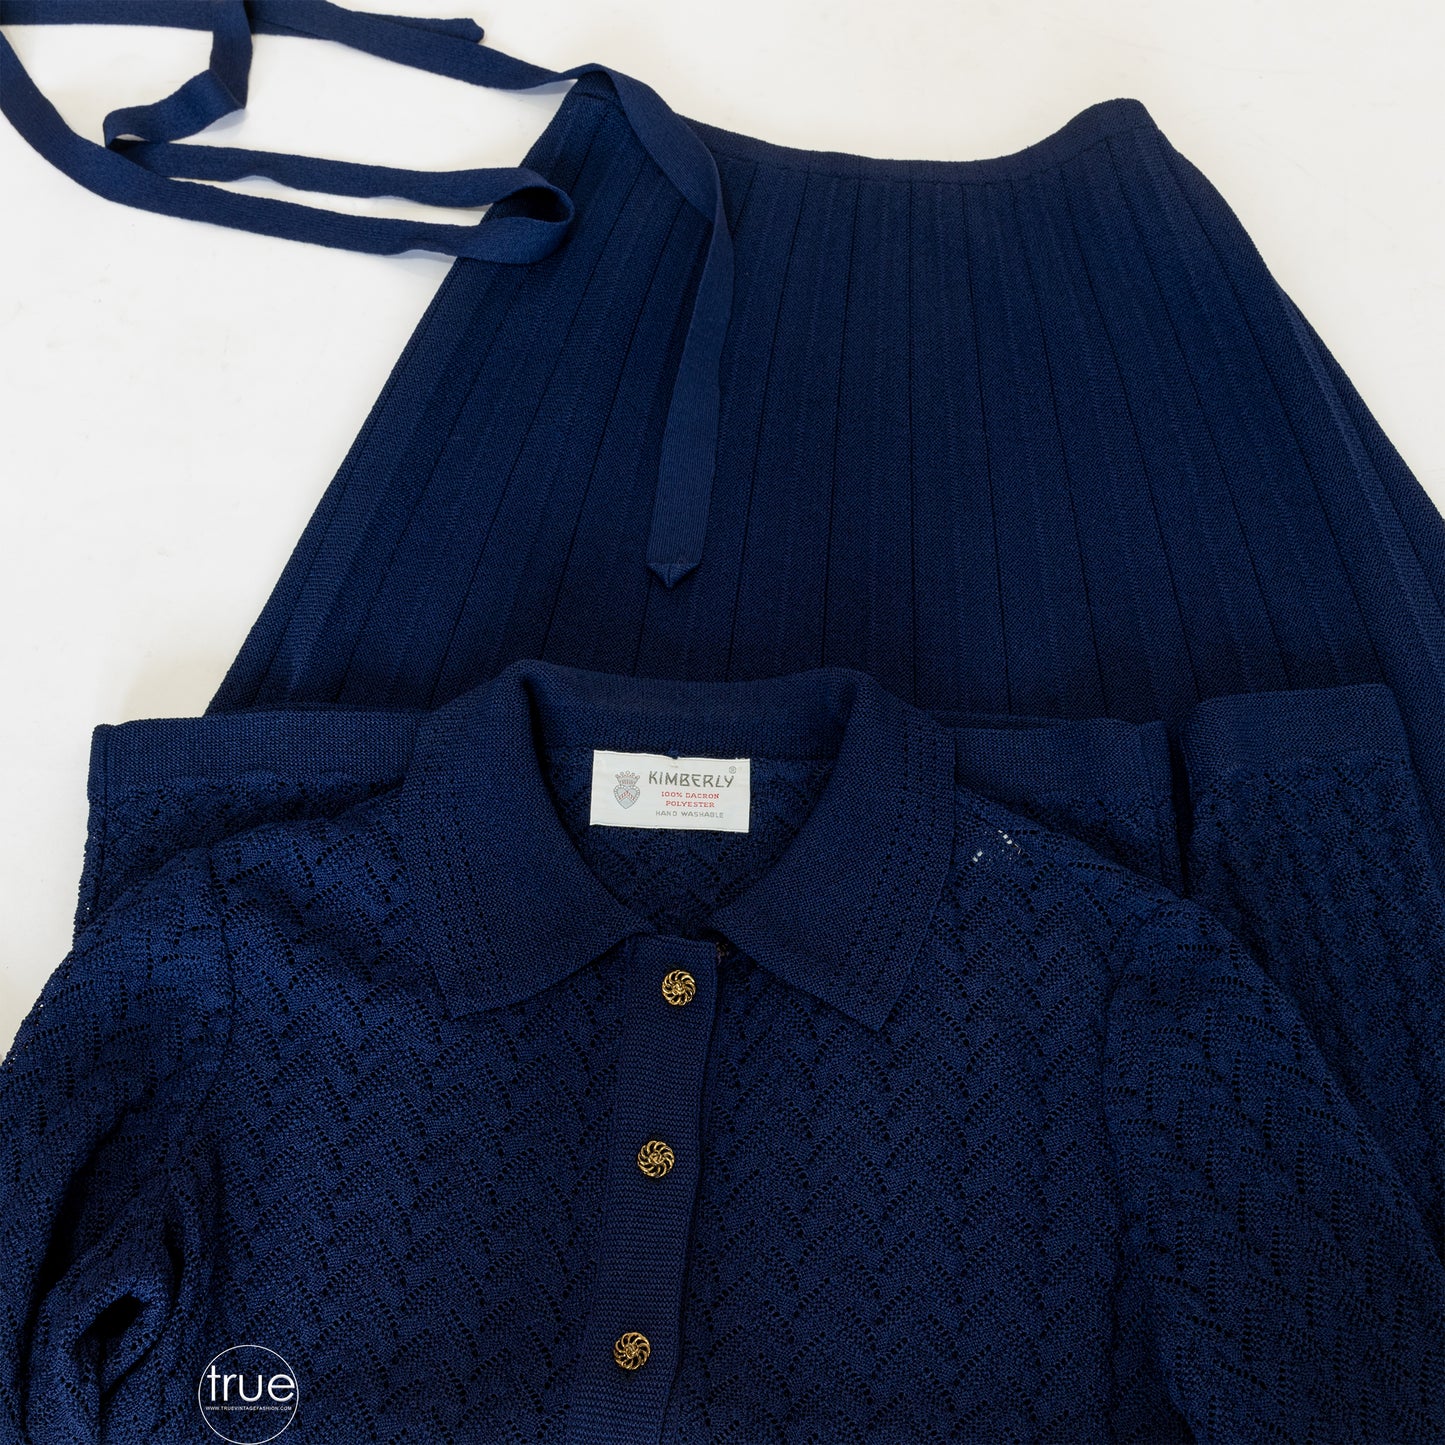 vintage 1950's knit set ...classic KIMBERLY navy blue pointelle knit cardigan & skirt set